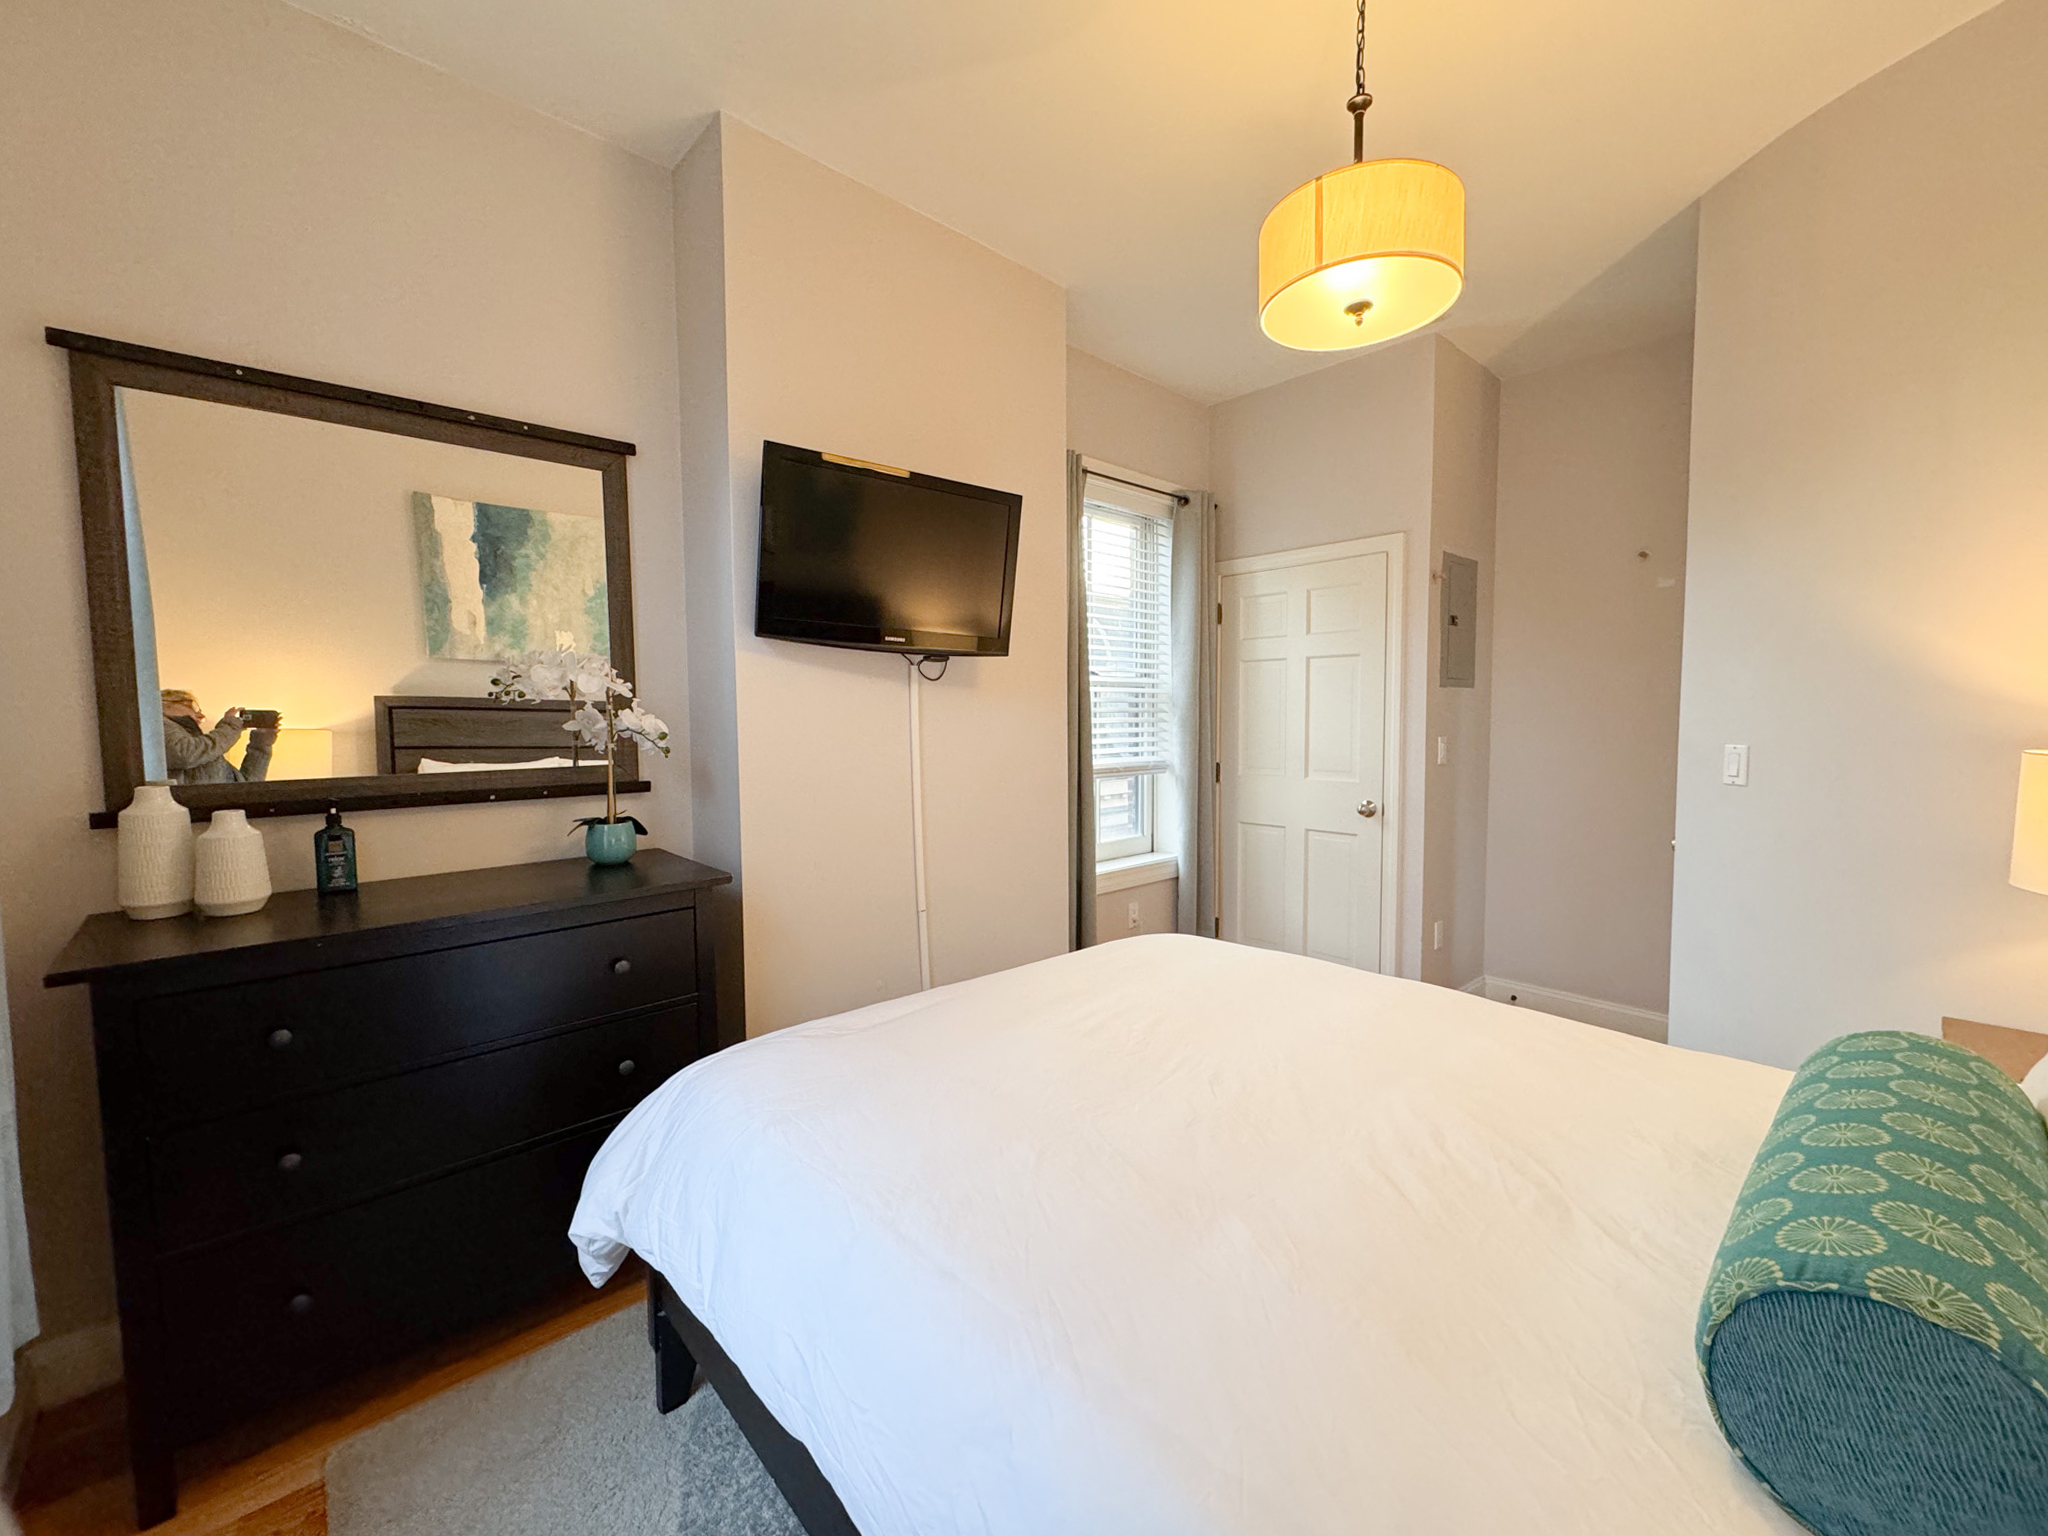 Photos of apartment on Harvard Sq.,Brookline MA 02445